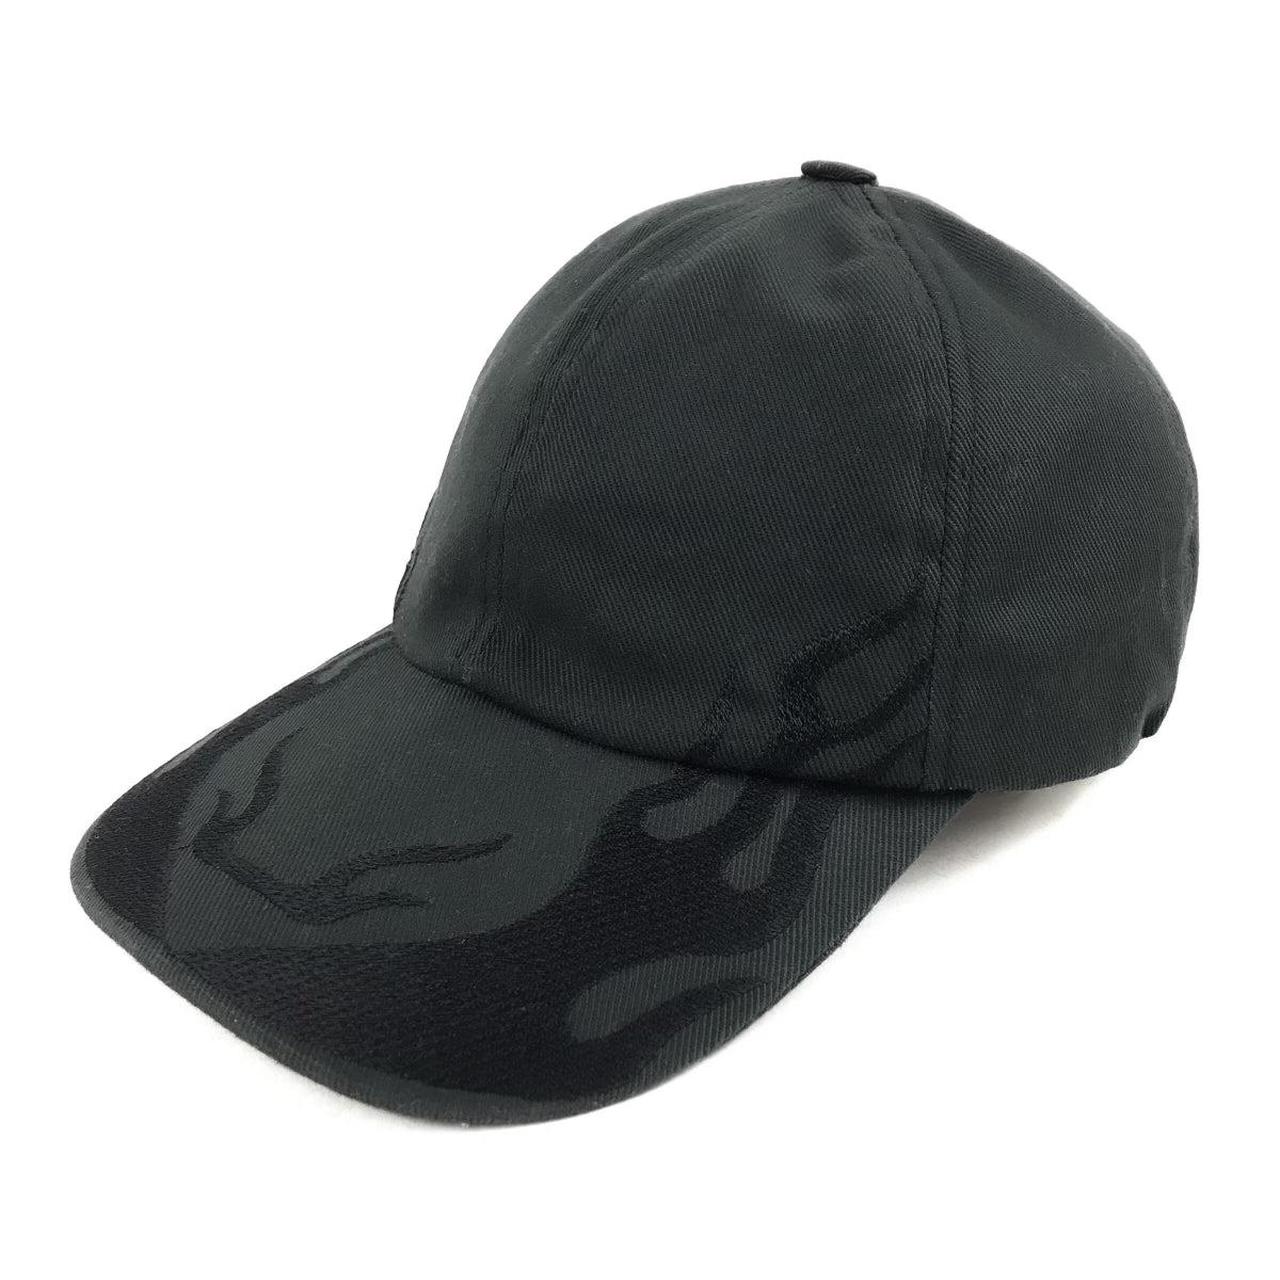 Brandy Melville Women's Black Hat